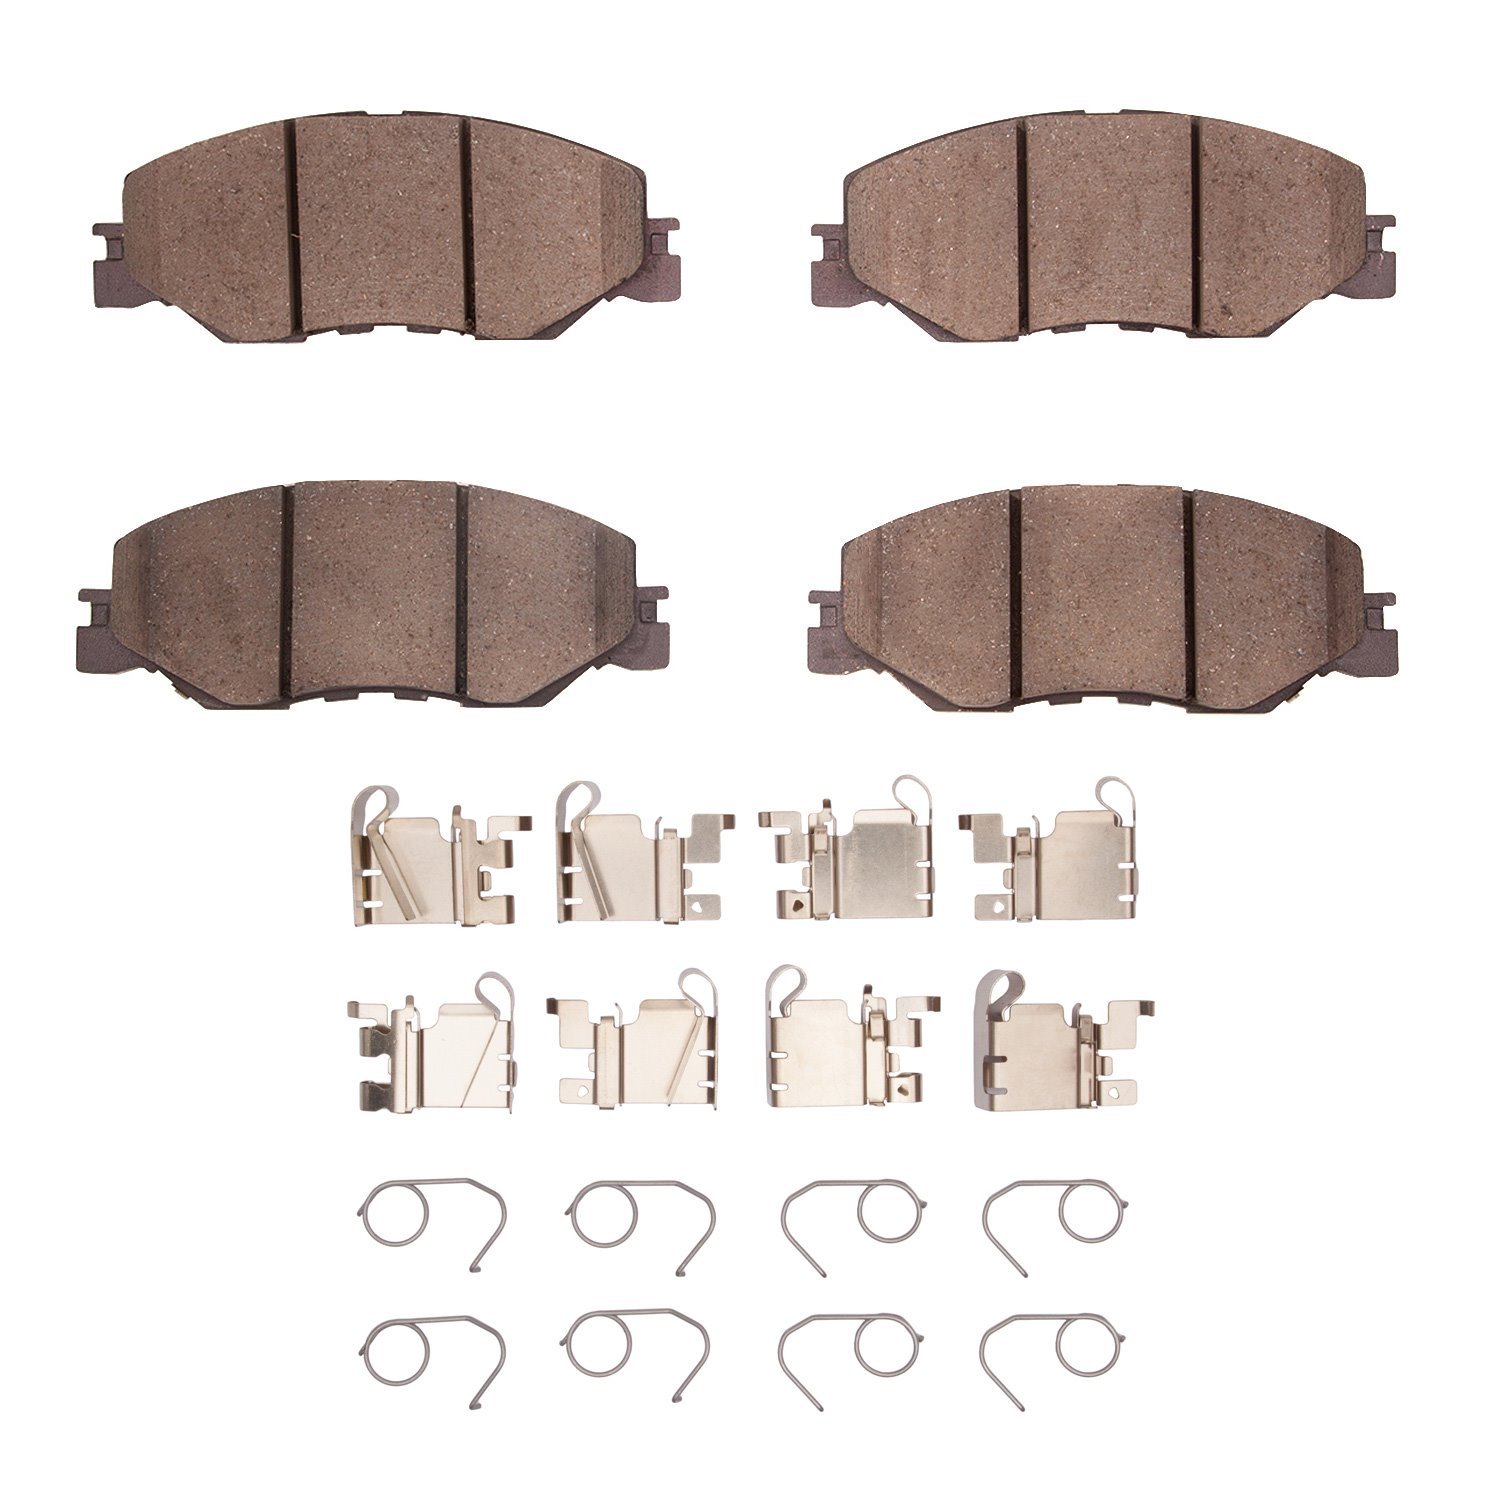 Optimum OE Brake Pads & Hardware Kit, Fits Select Acura/Honda, Position: Front